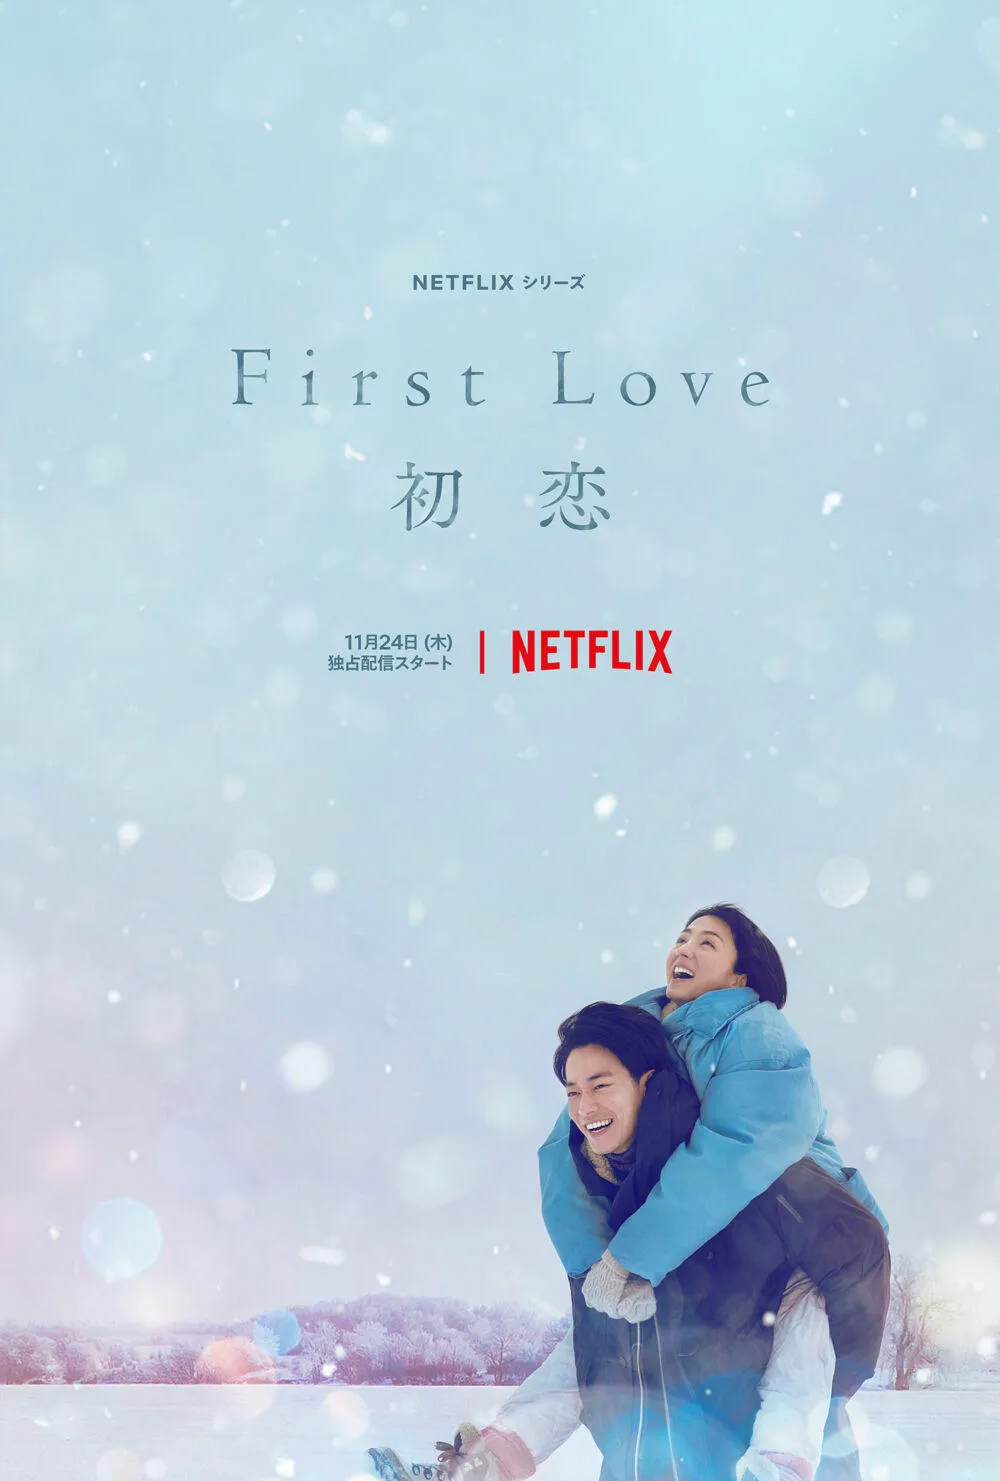 Trailer for Japanese drama "First Love" starring Hikari Mitsushima and Takeru Satoh | FMV6